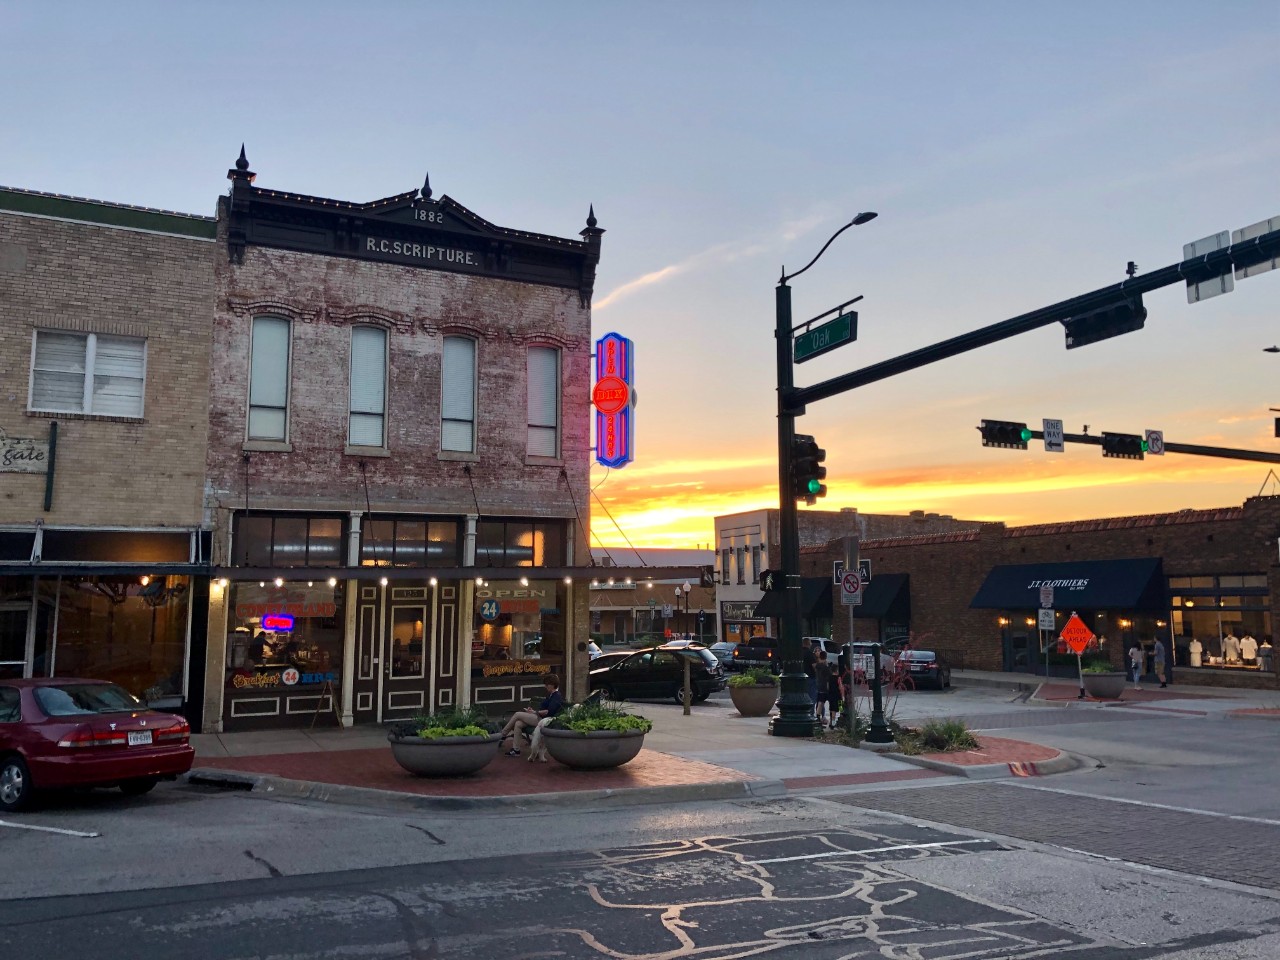 Small town street corner at sunset